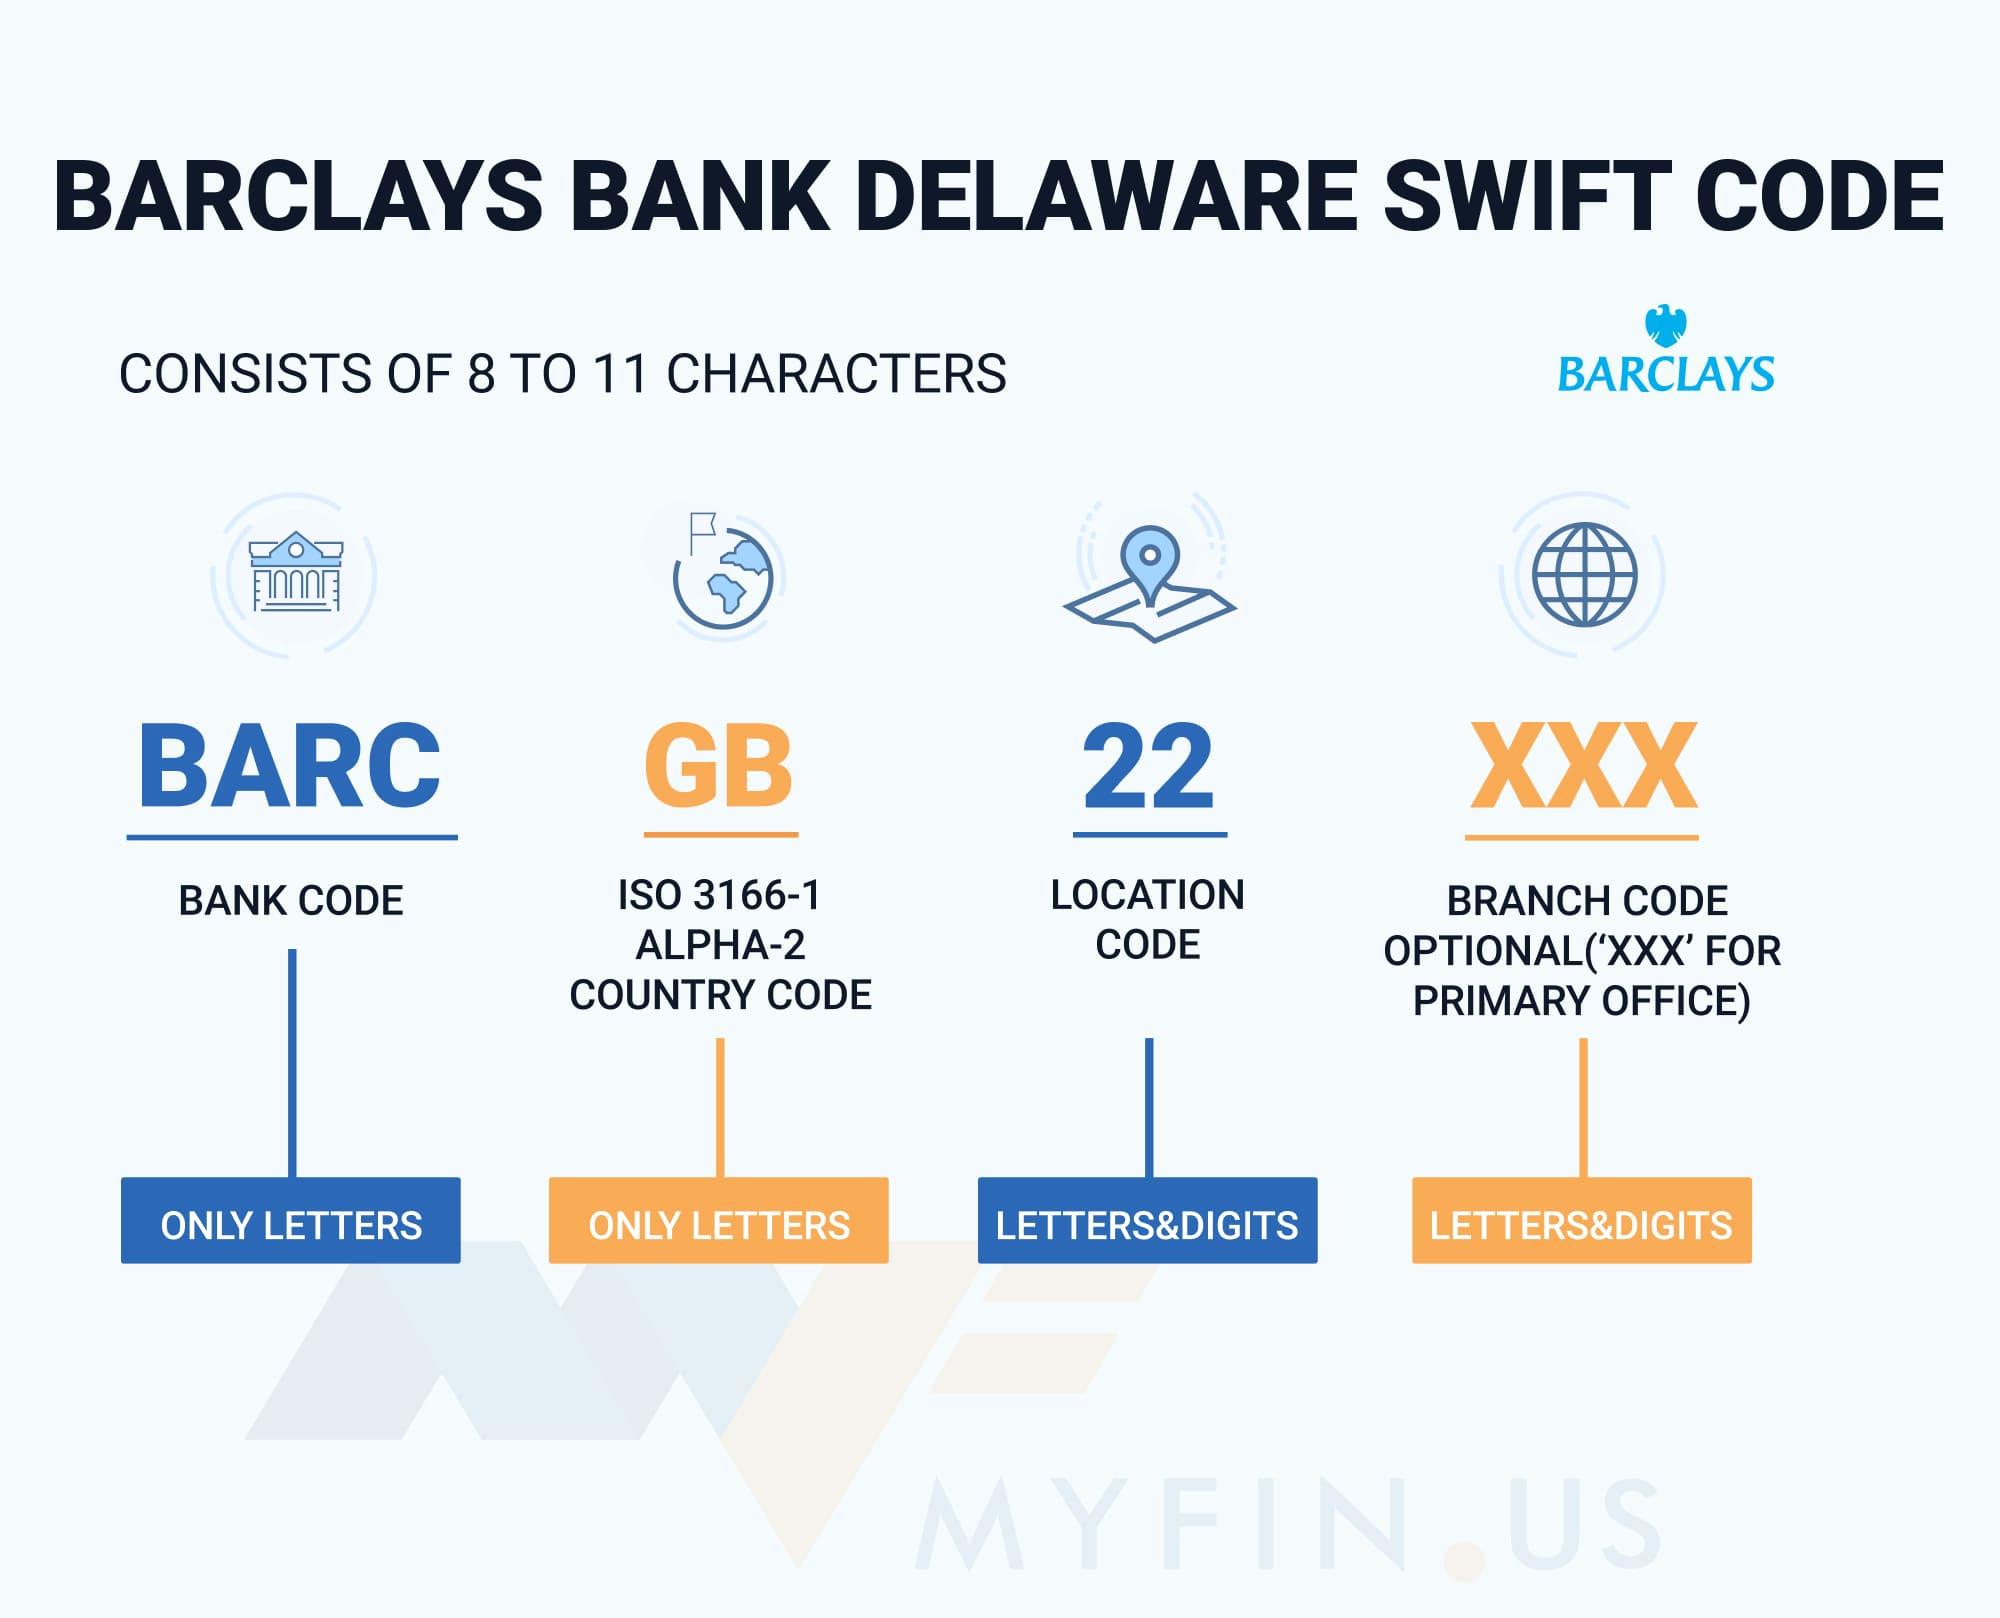 SWIFT-code Barclays Bank Delaware